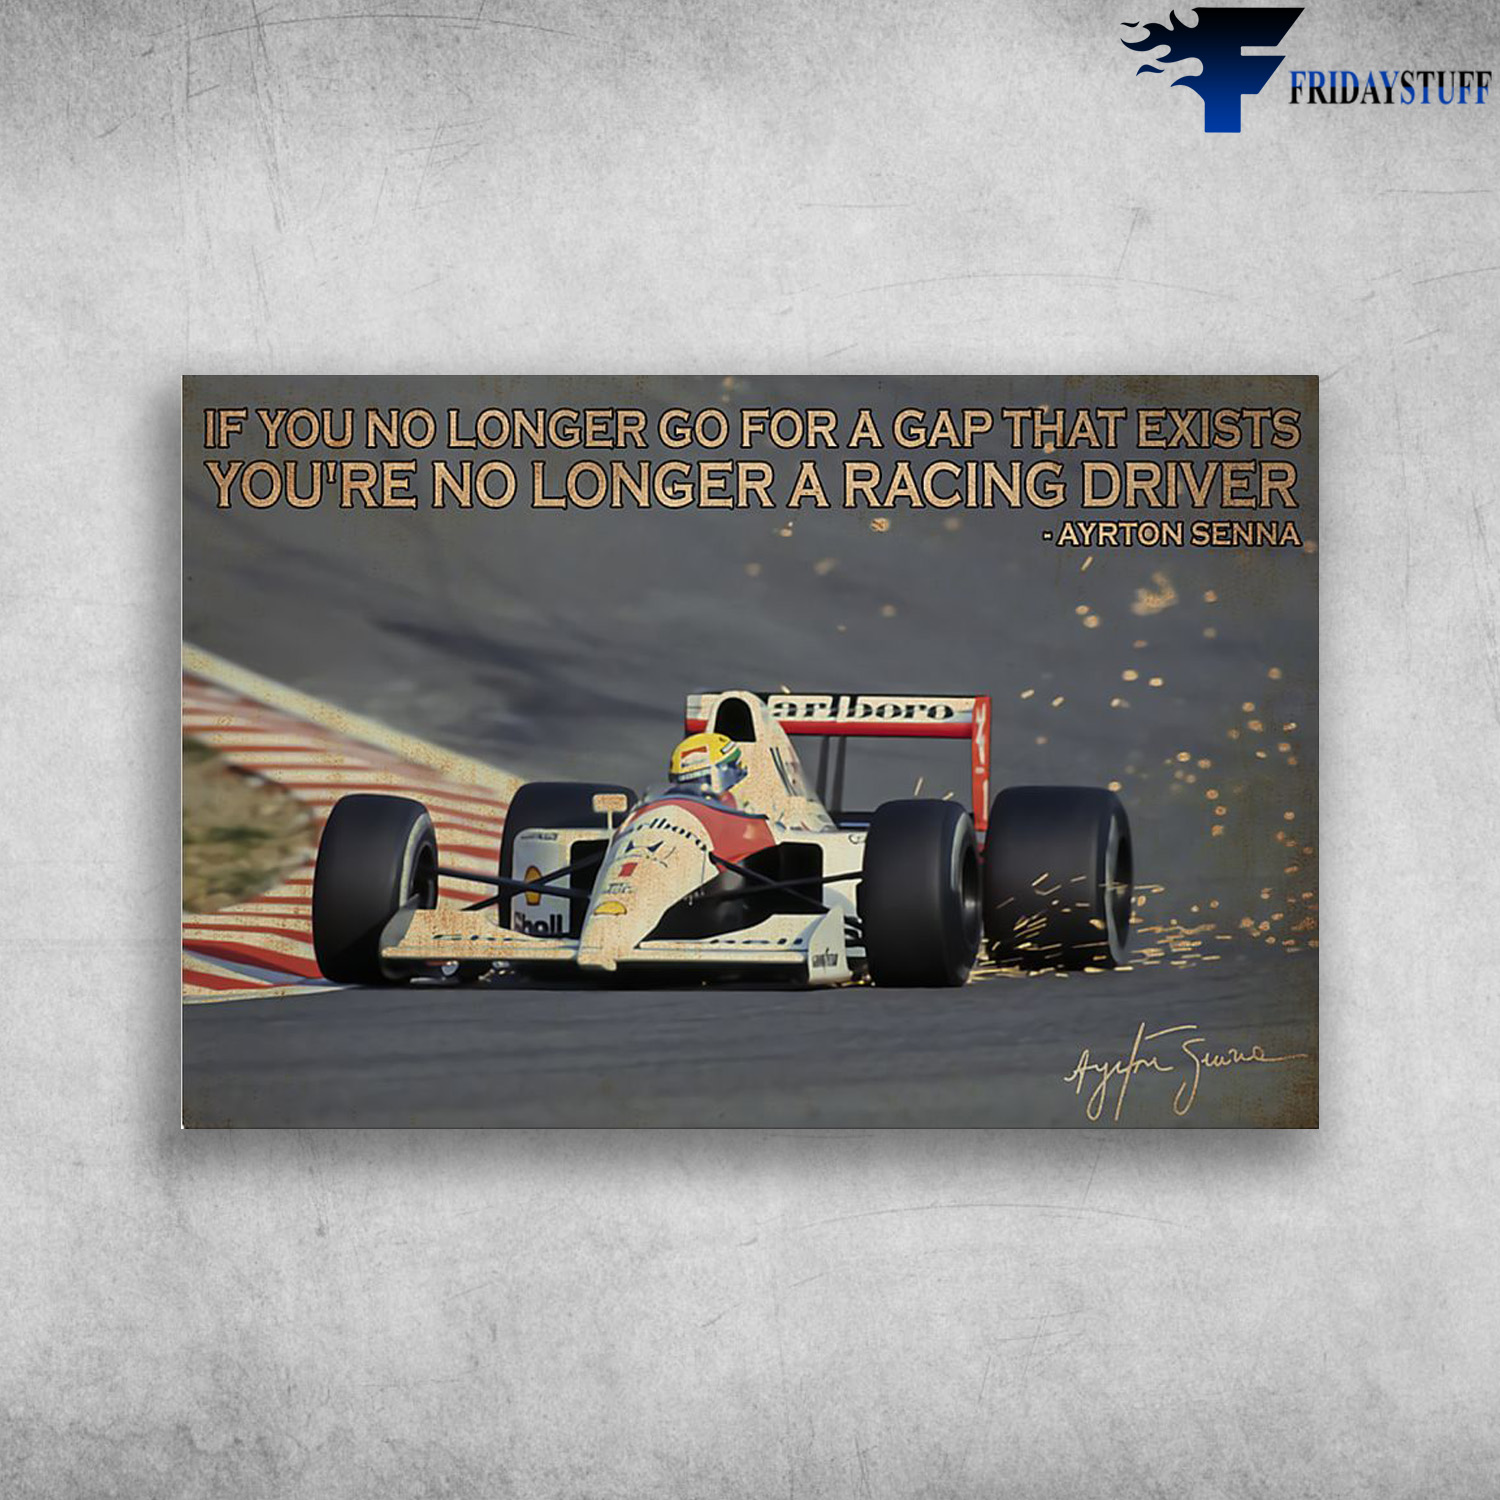 Racing Driver - If You No Longer Go For A Gap That Exists, You're No Longer A Racing Driver, Ayrton Senna